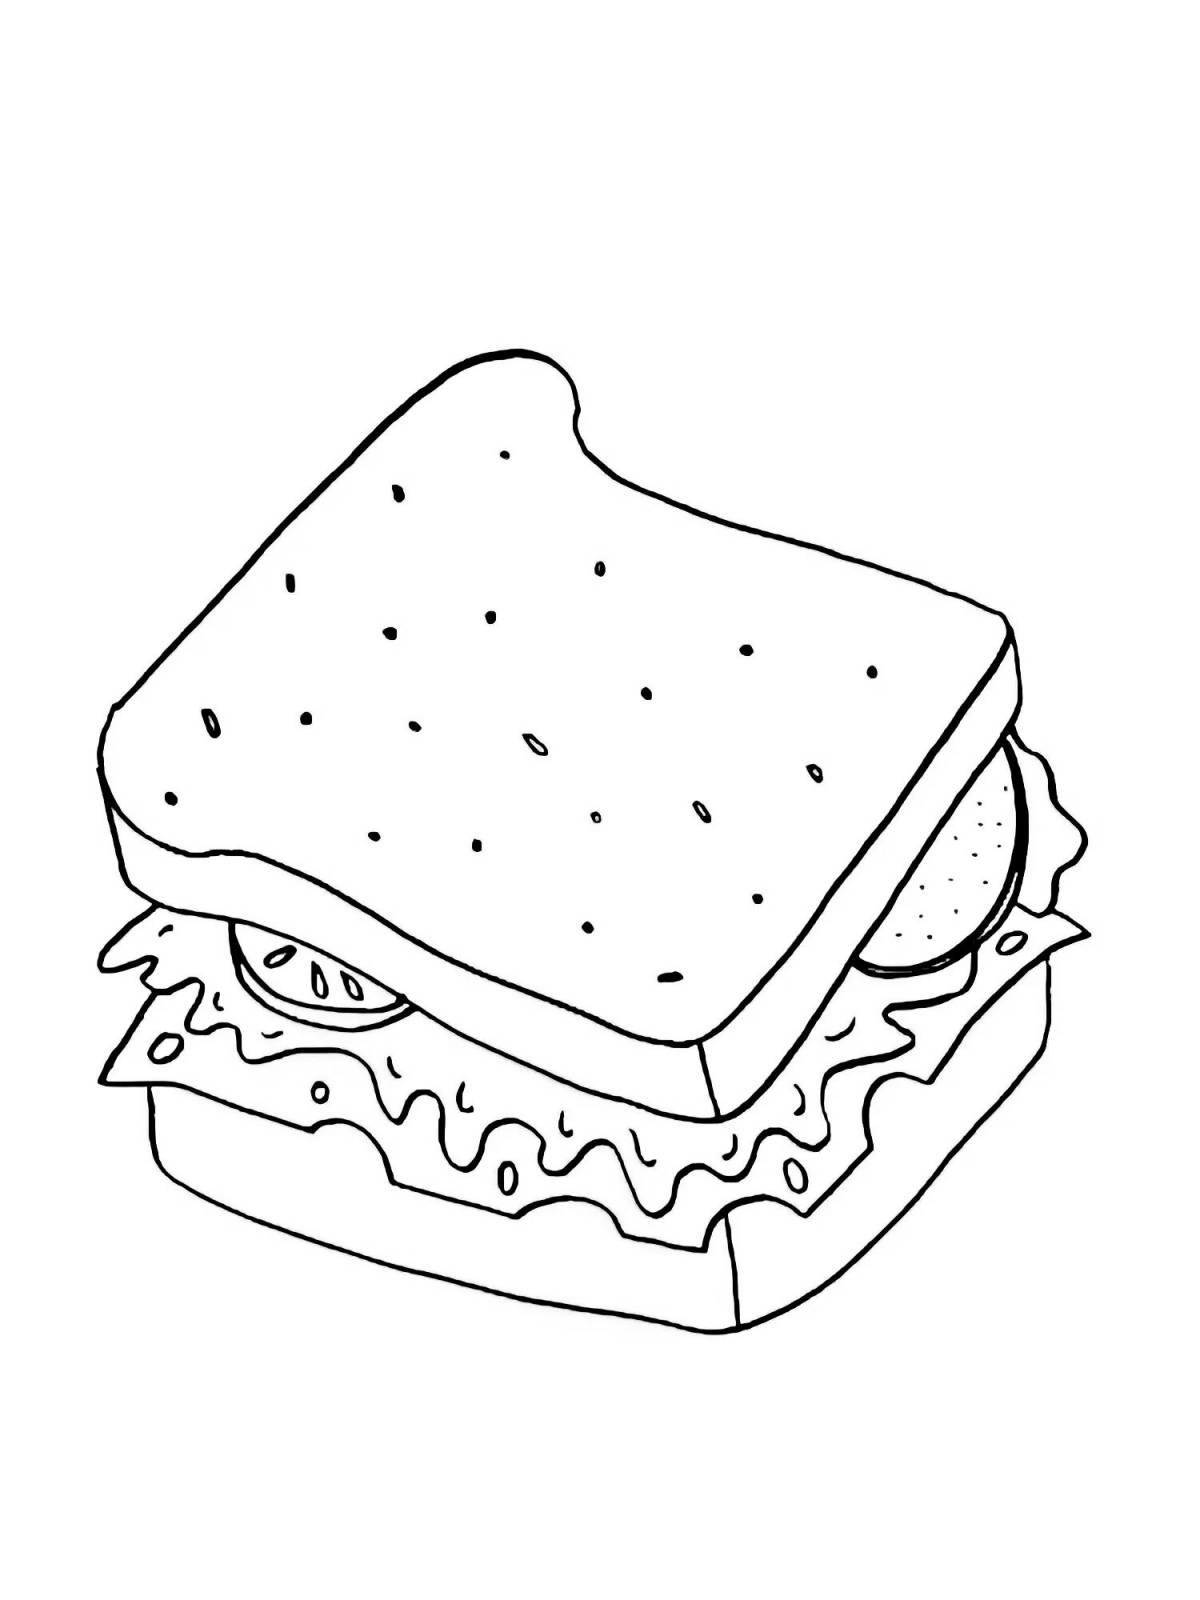 A fun sandwich coloring book for kids